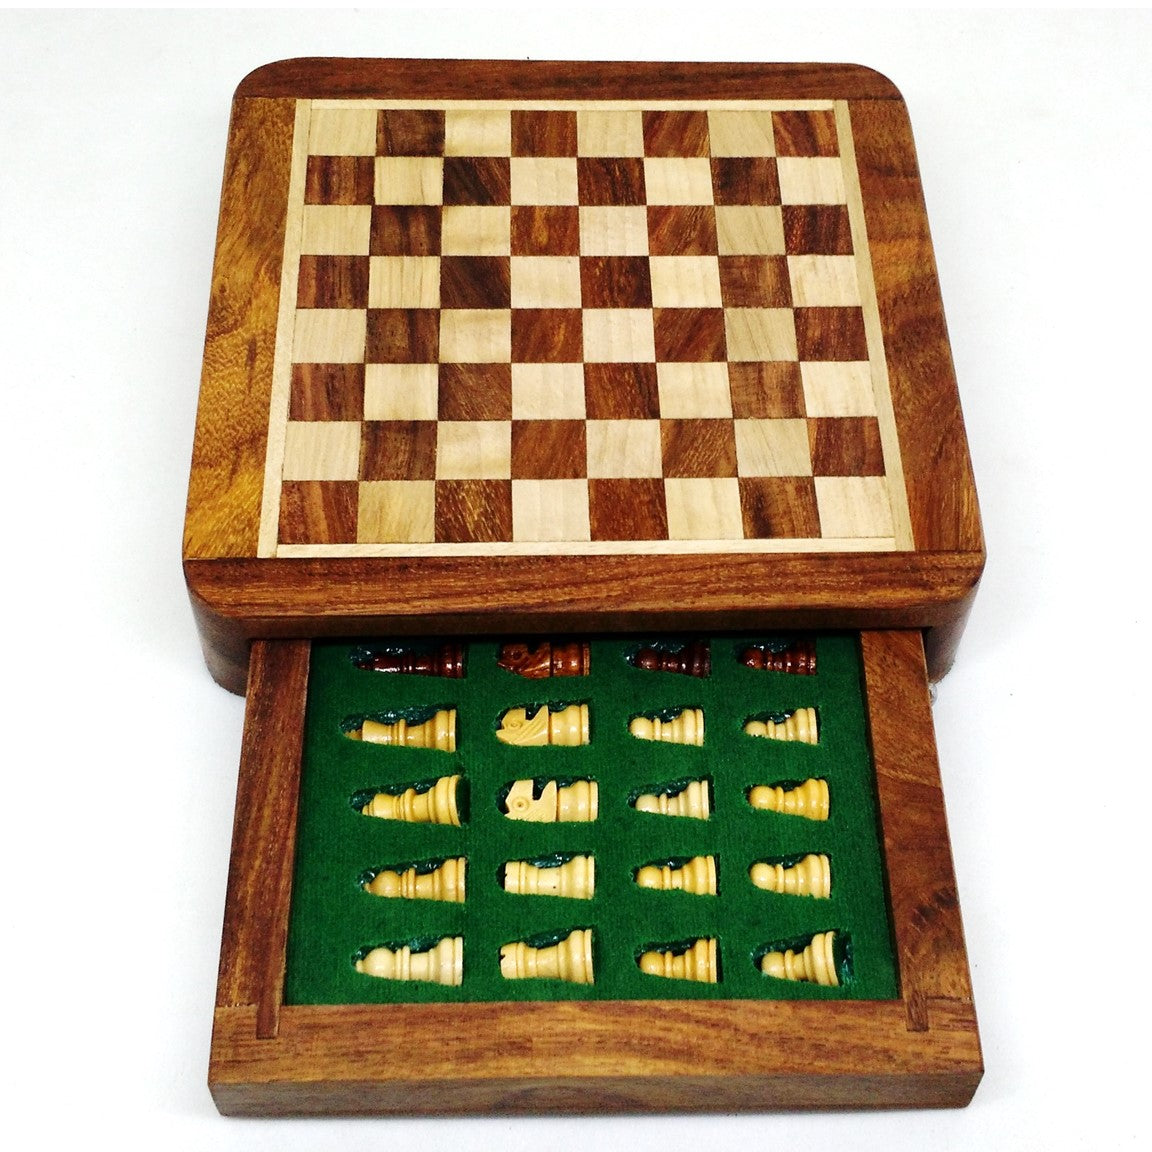 Magnetic Travel Chess set